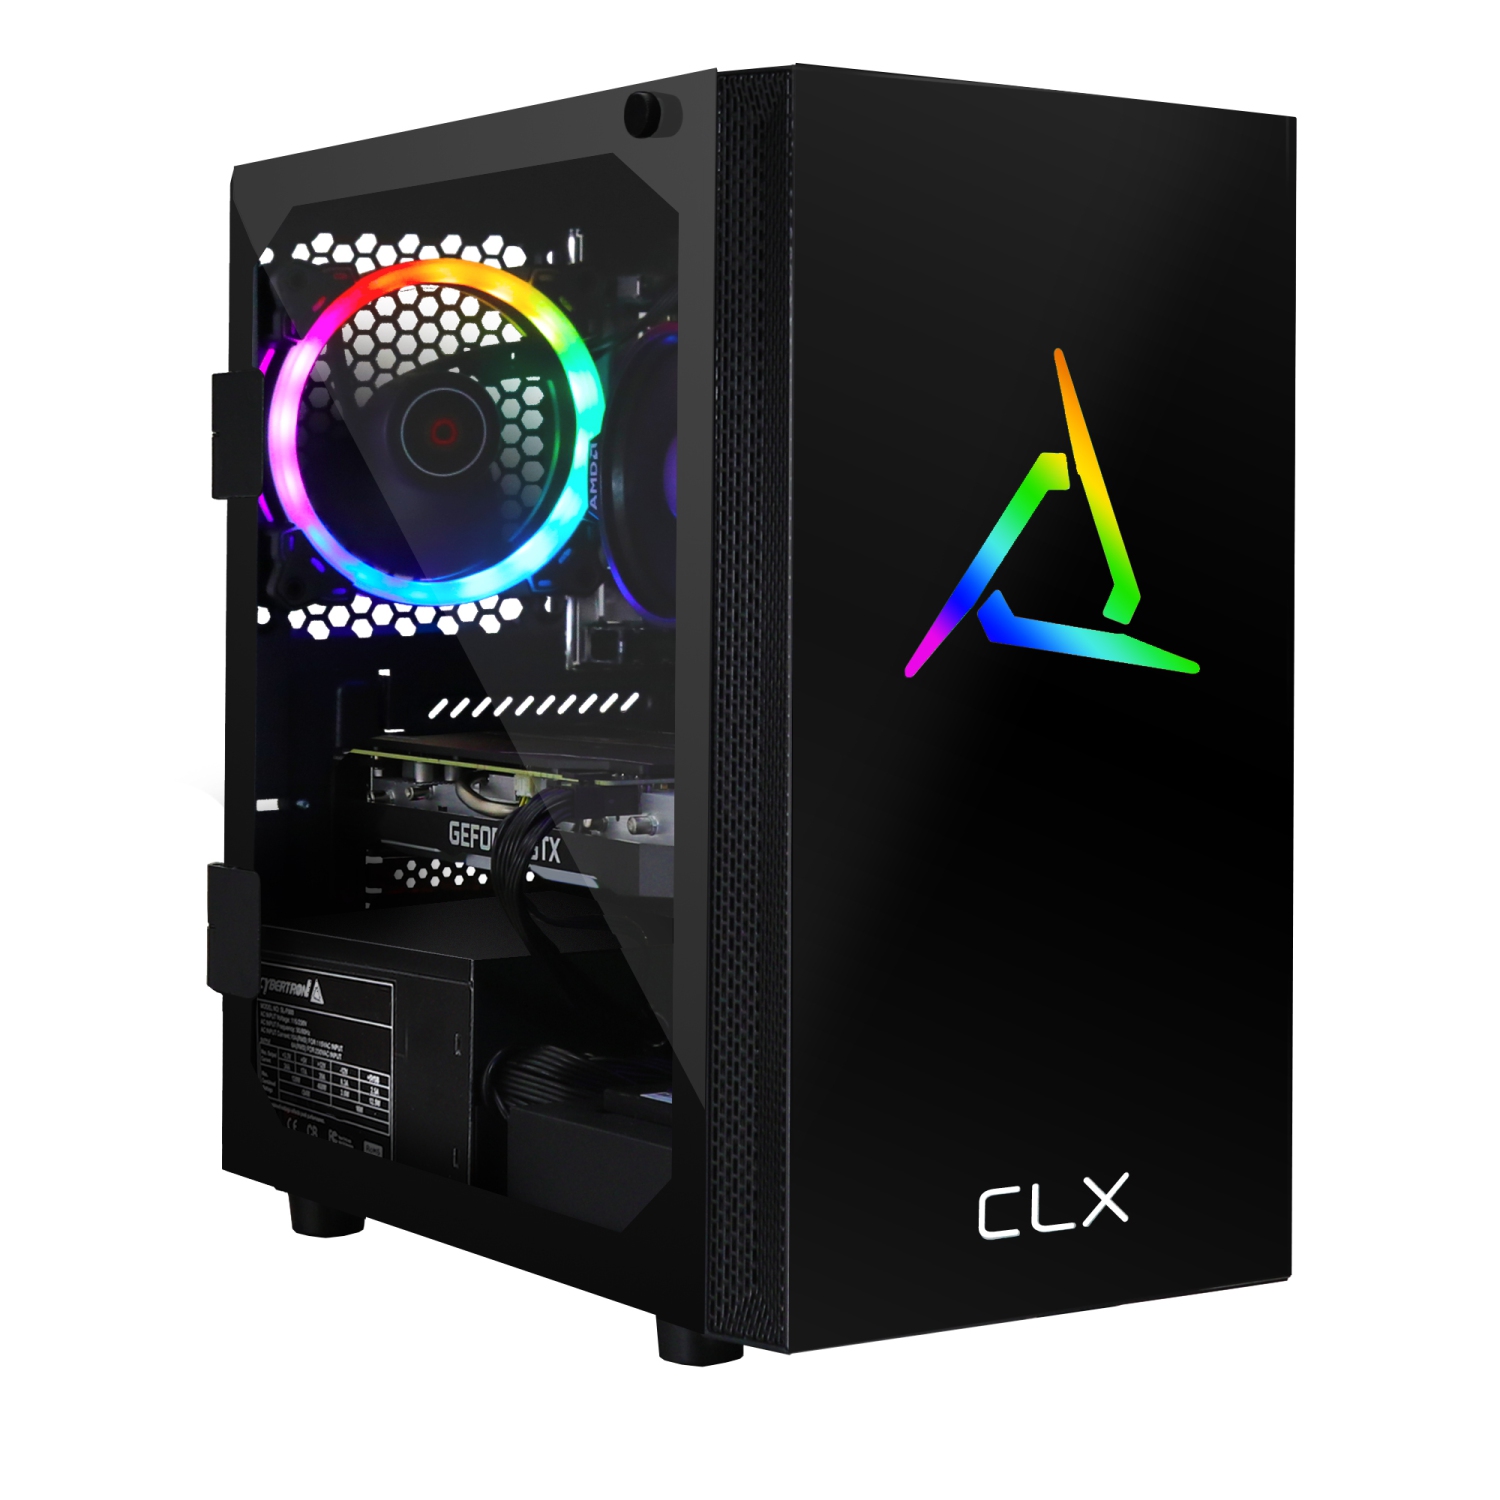 CLX SET Gaming Desktop - AMD Ryzen 5 3600 3.6GHz - 8GB Memory - GeForce GTX 1650 - 480GB SSD